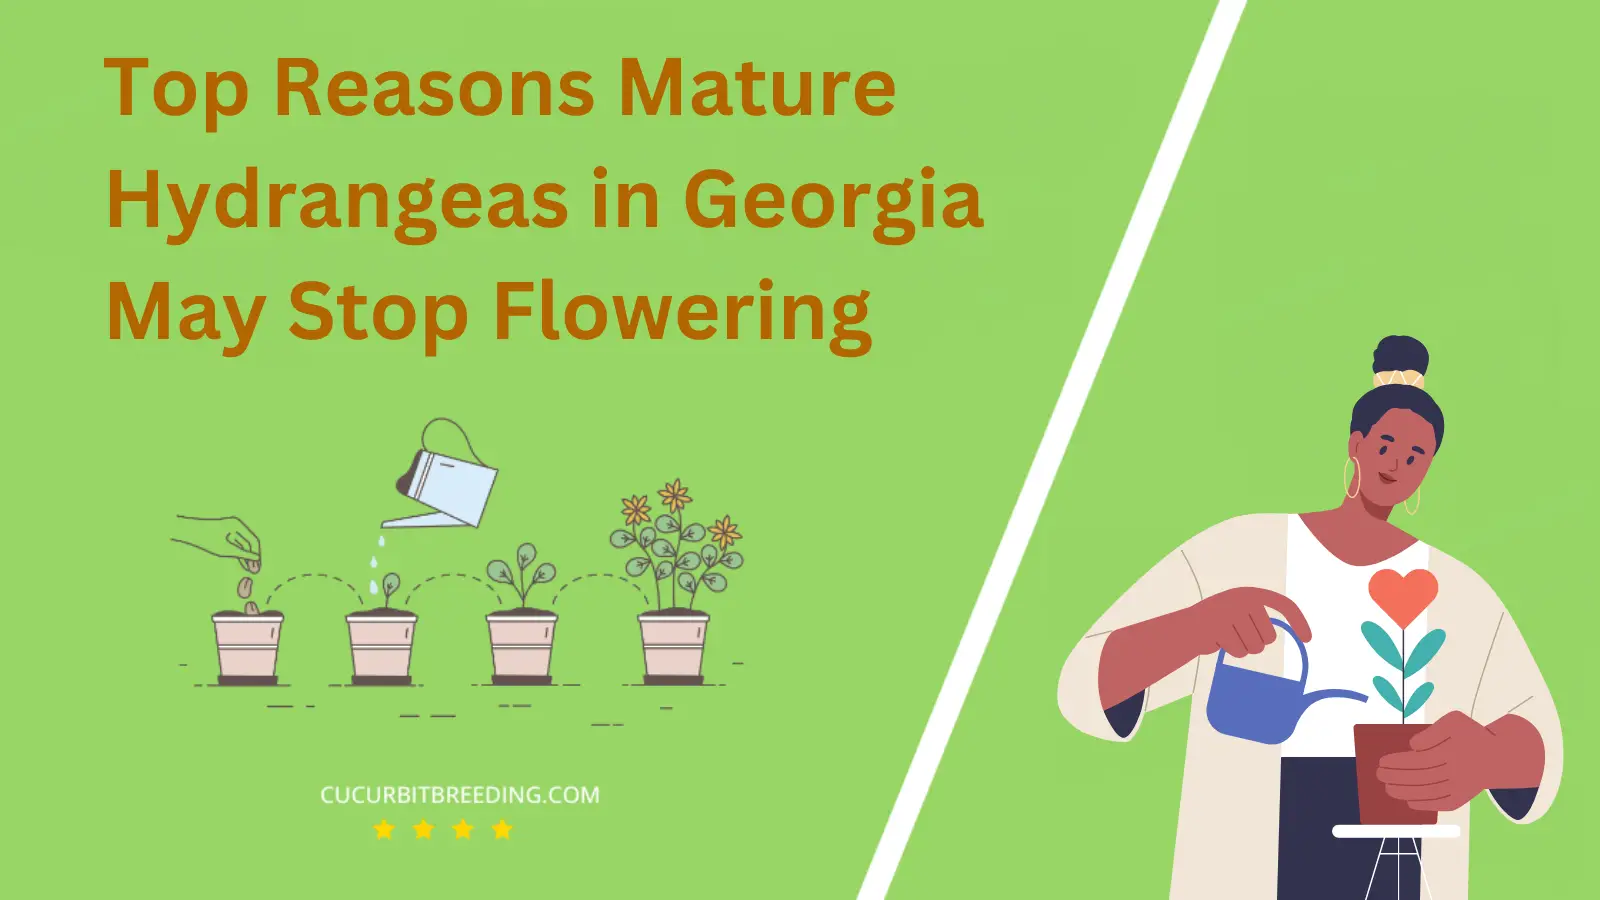 Top Reasons Mature Hydrangeas in Georgia May Stop Flowering